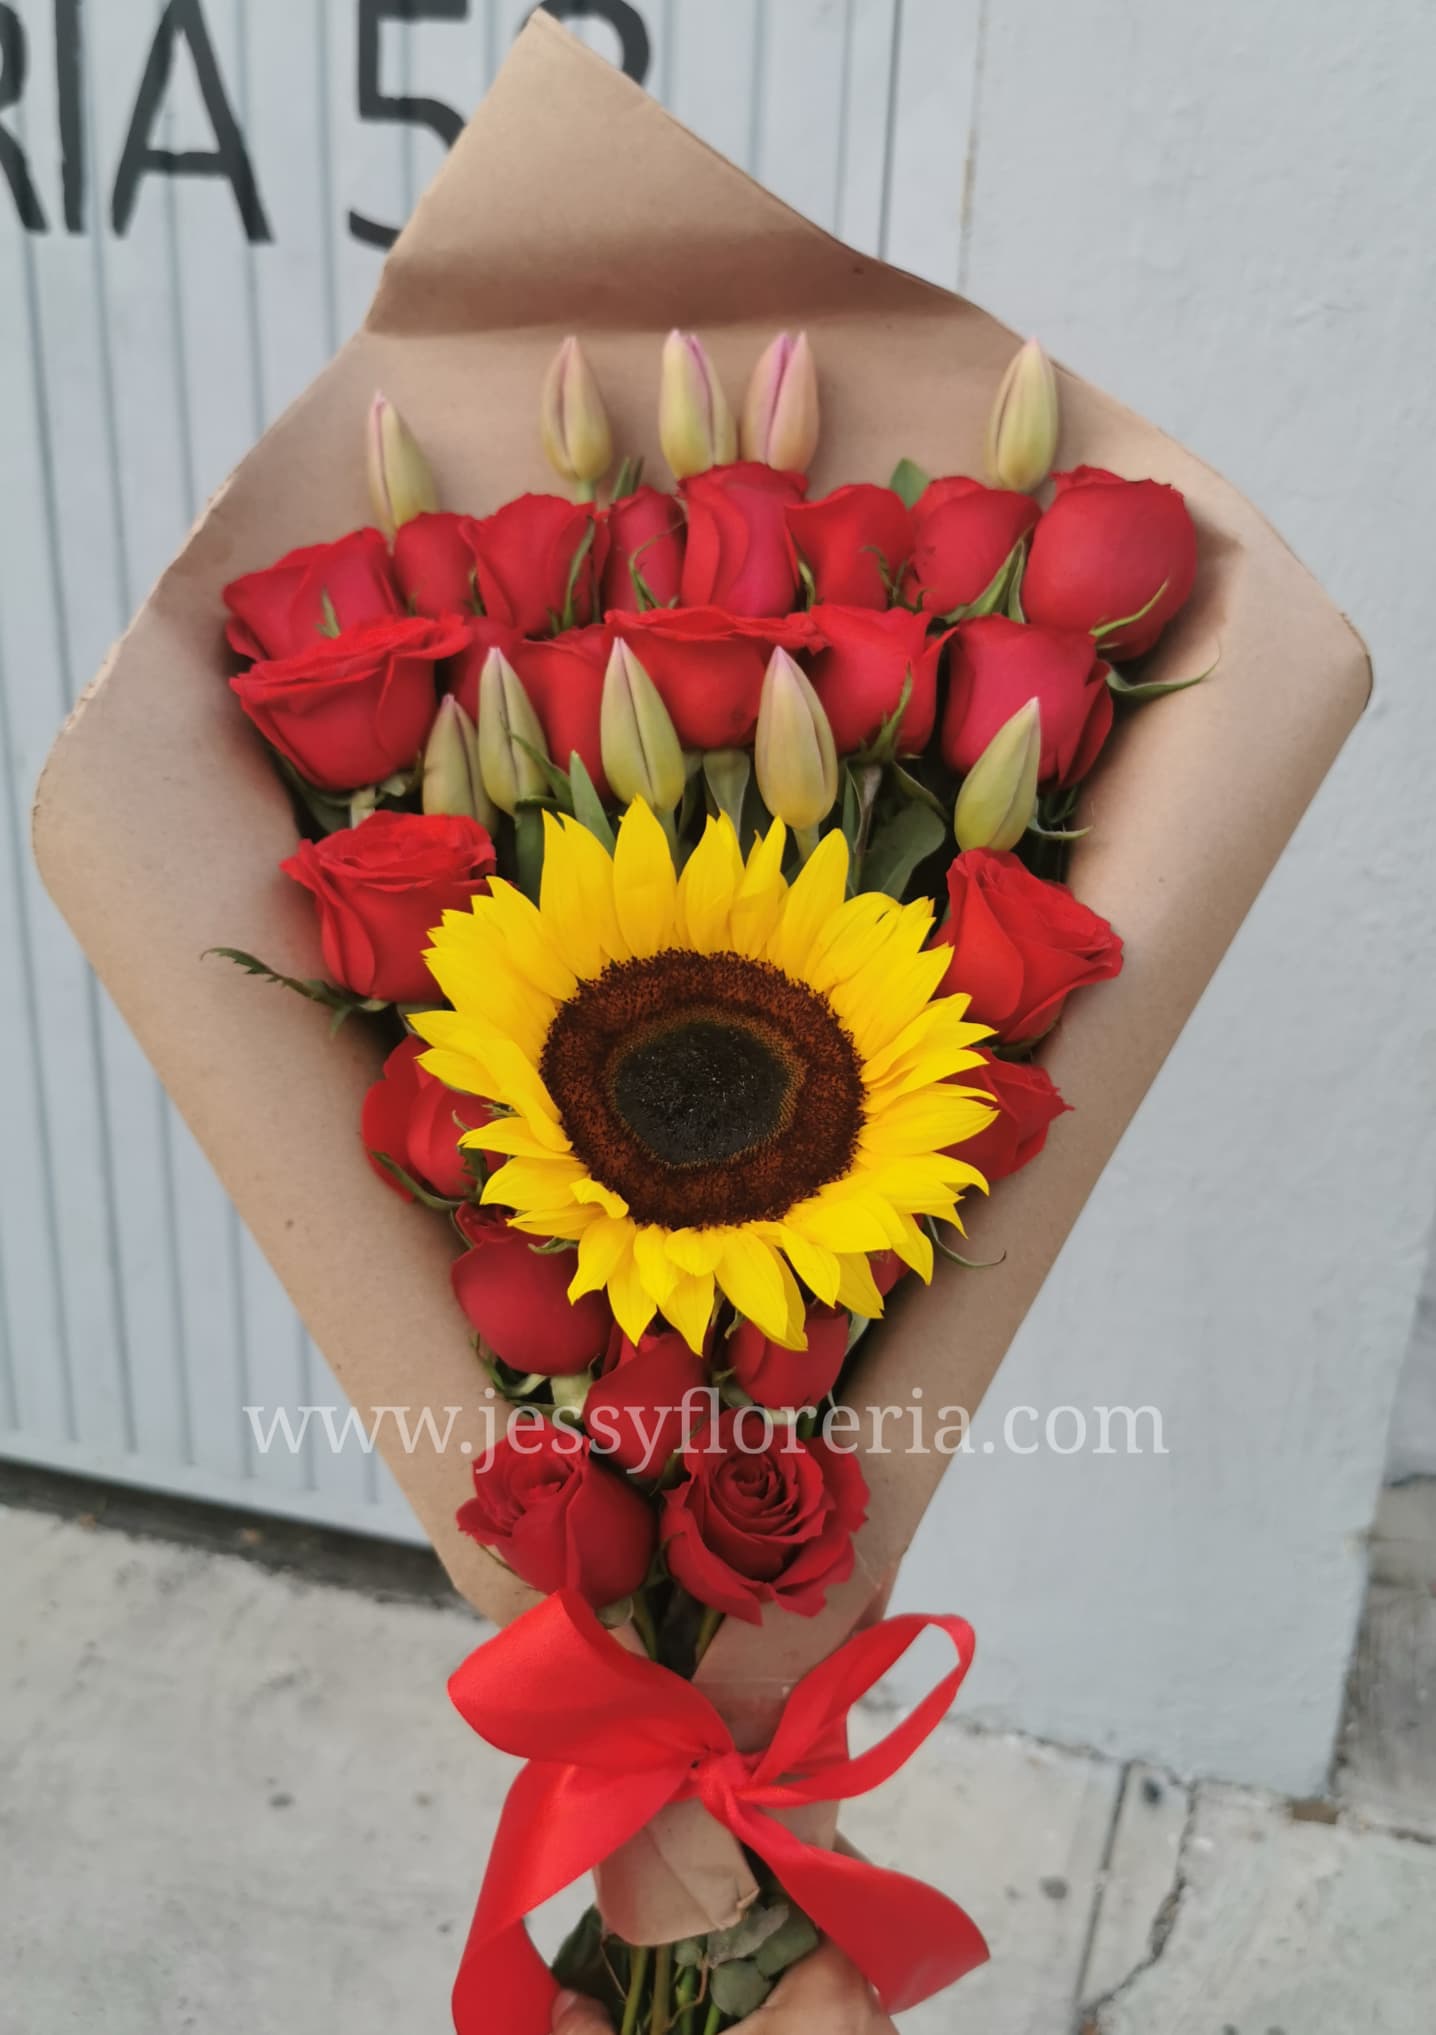 Ramo rosas, tulipanes y girasol - Envíos GRATIS Mismo día 2 a 4 Hrs